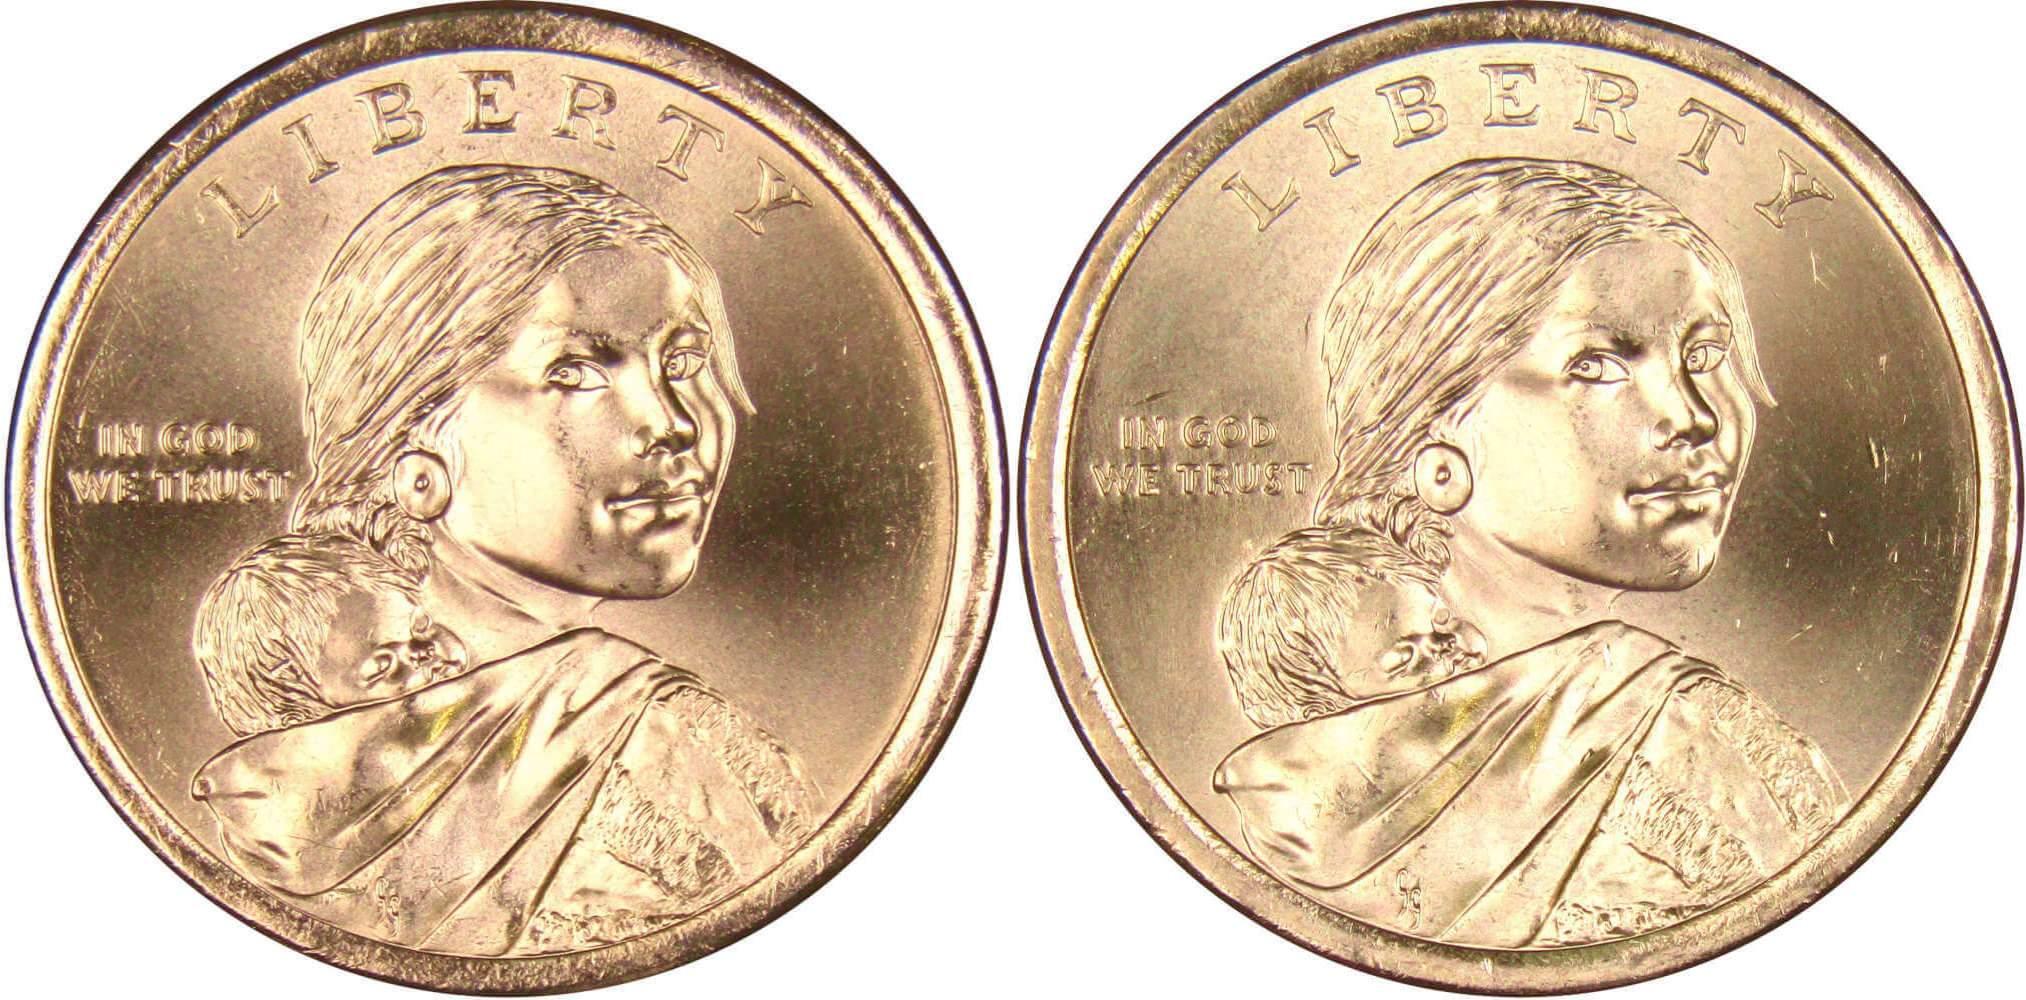 2017 P&D Sequoyah Native American Dollar 2 Coin Set BU Uncirculated $1